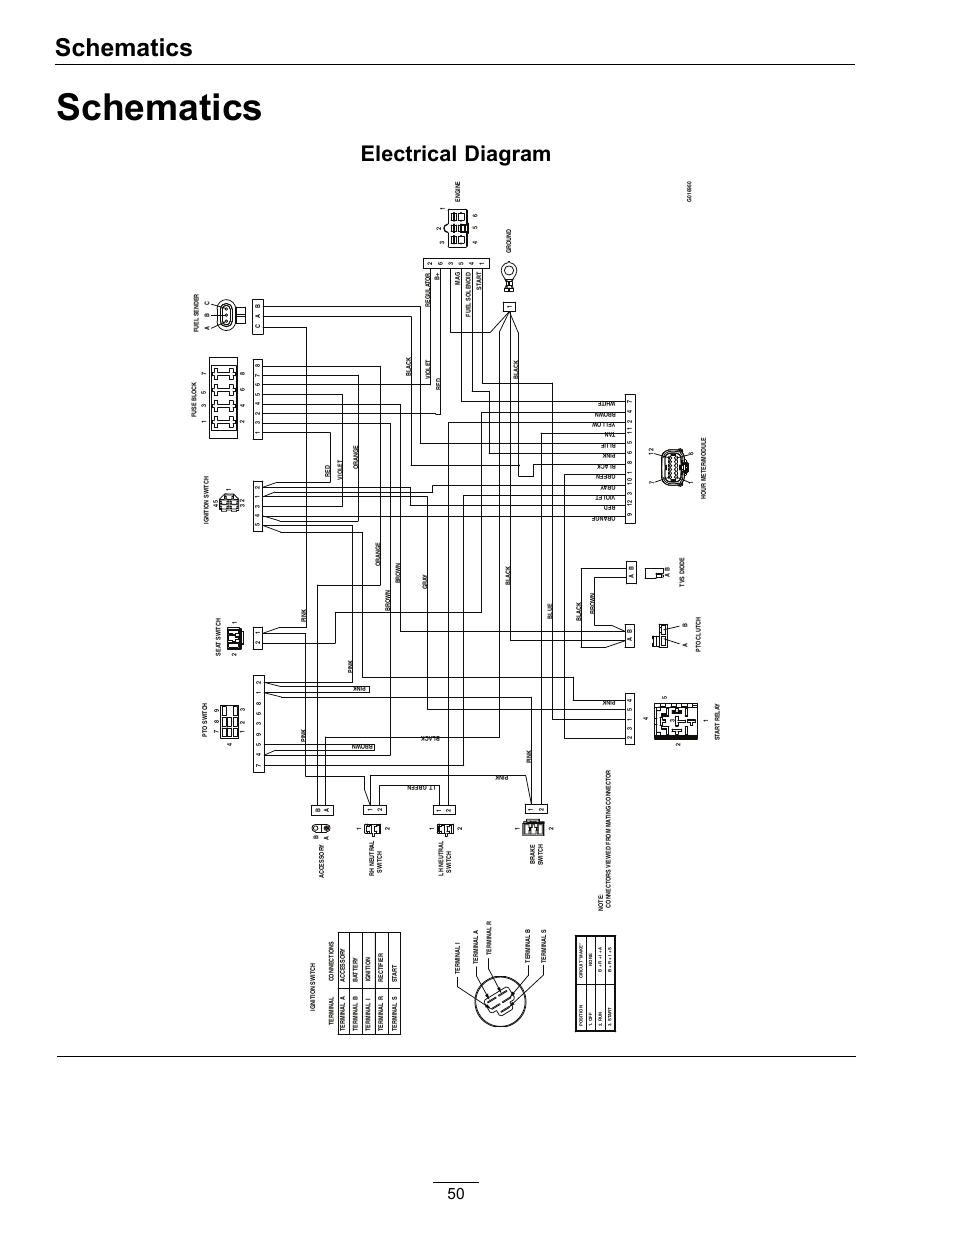 zamil package unit wiring diagram